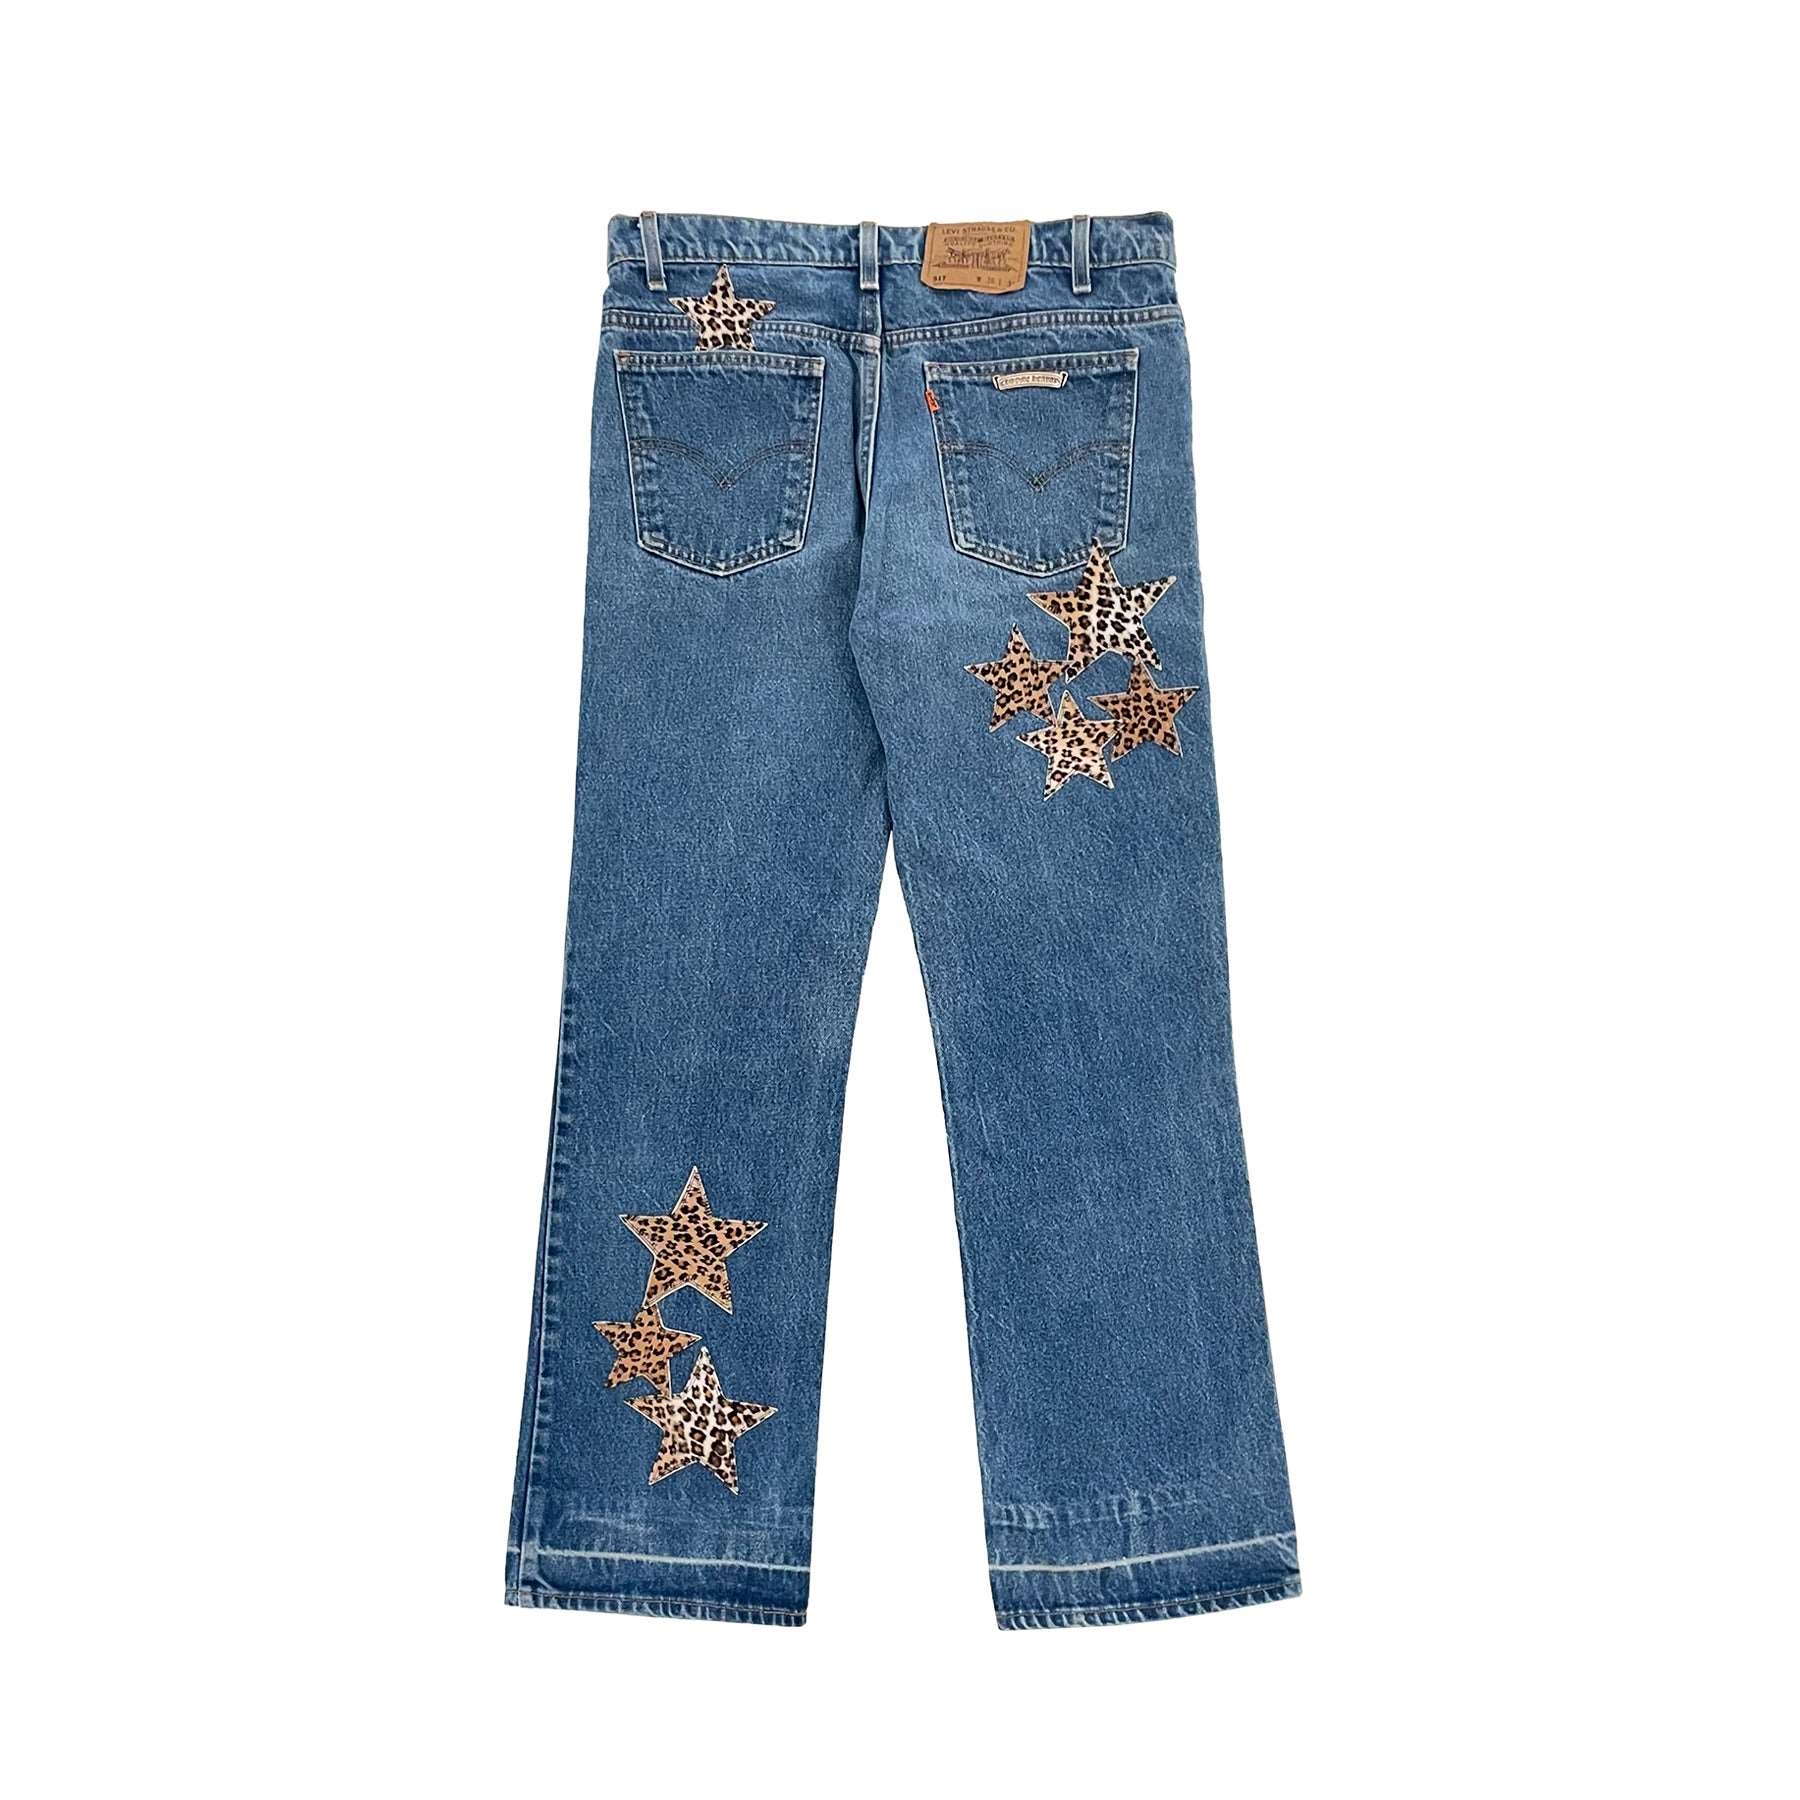 Chrome Hearts 517 Star Leather Jeans - SHENGLI ROAD MARKET